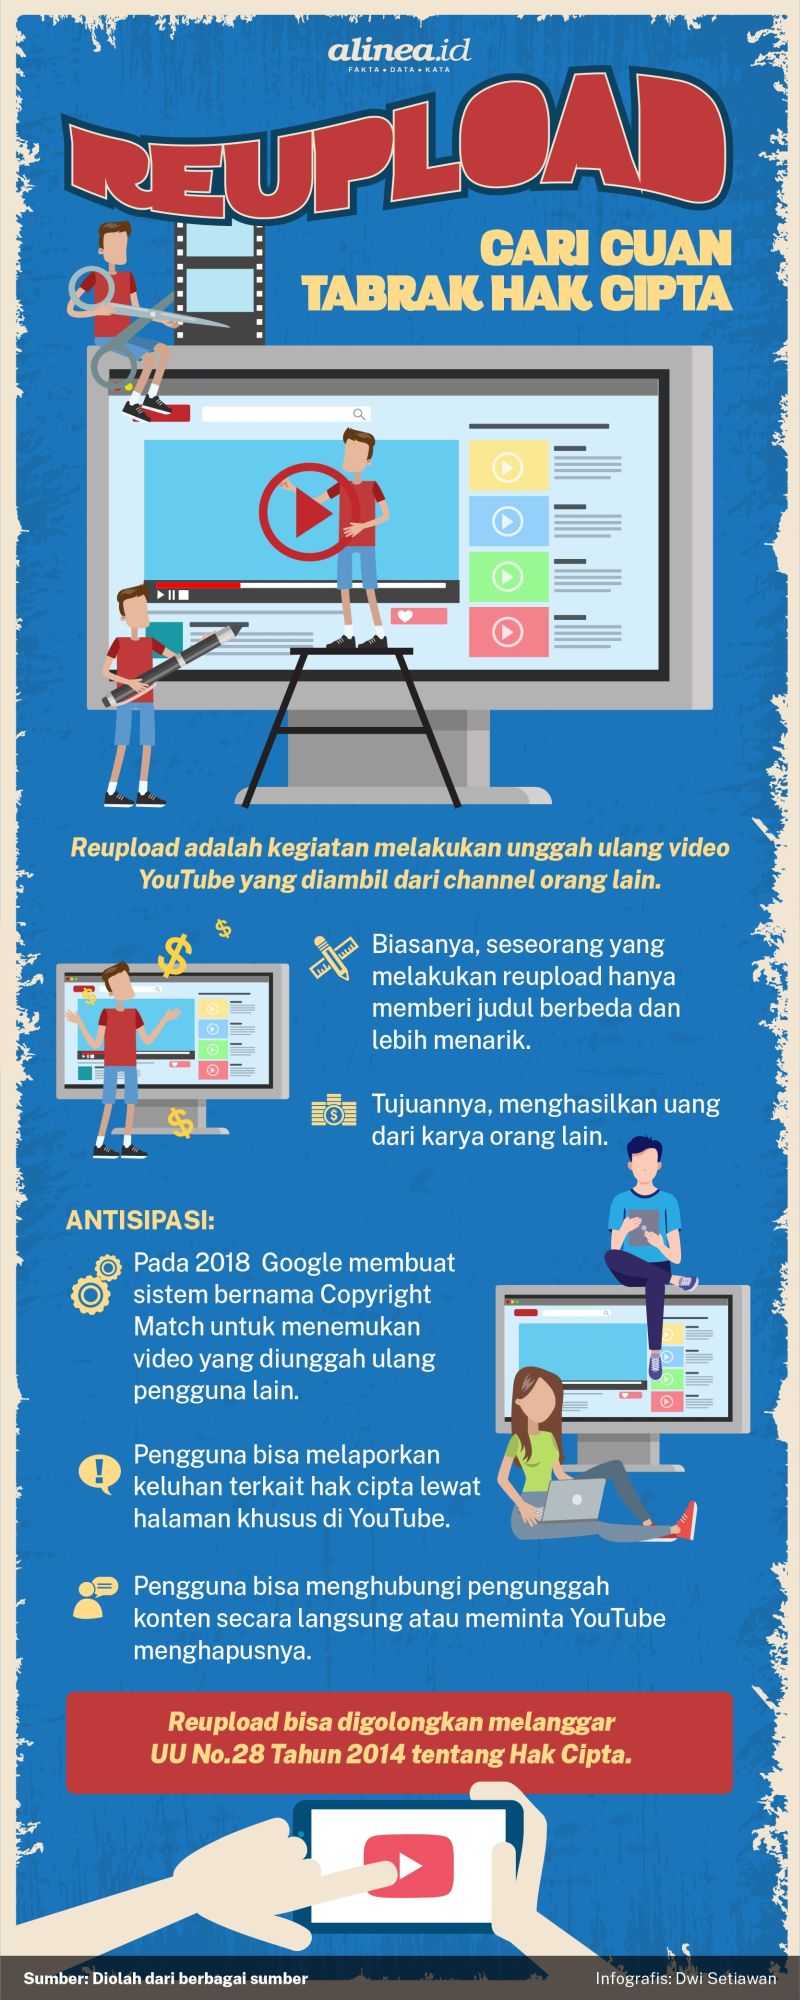 Infografik upload YouTube. Alinea.id/Dwi Setiawan.